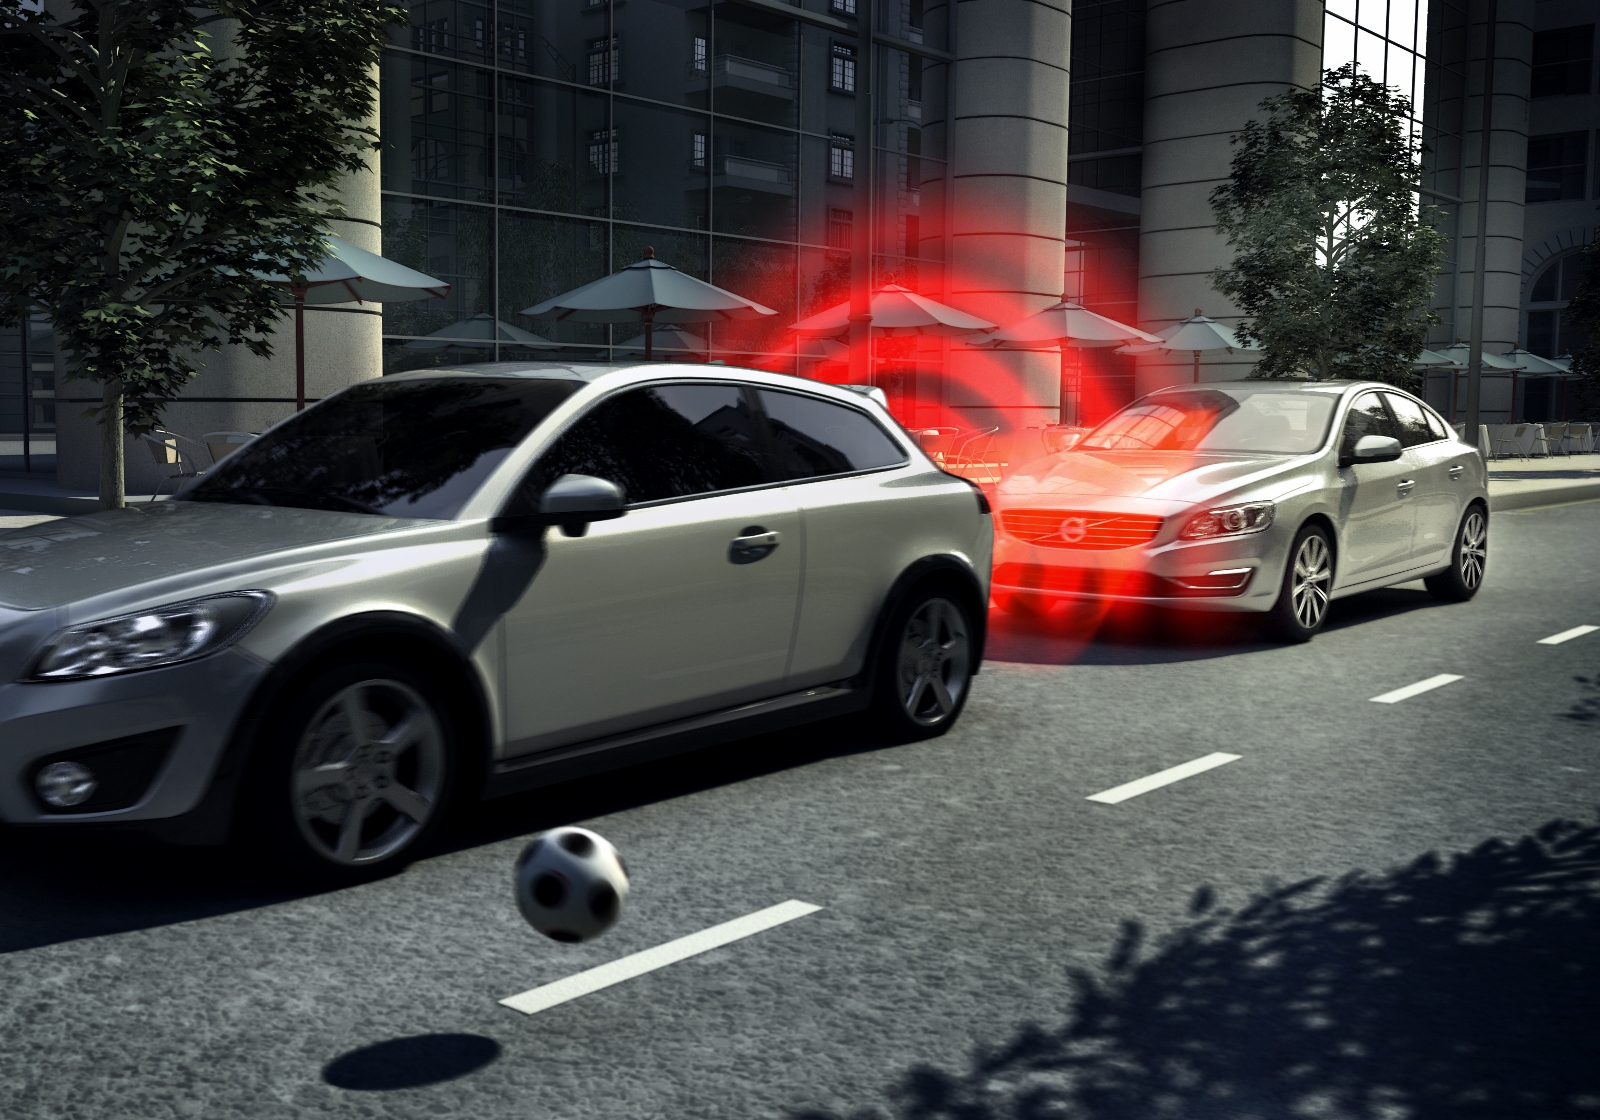 Tehnologia AEB ajuta la evitarea coliziunilor auto